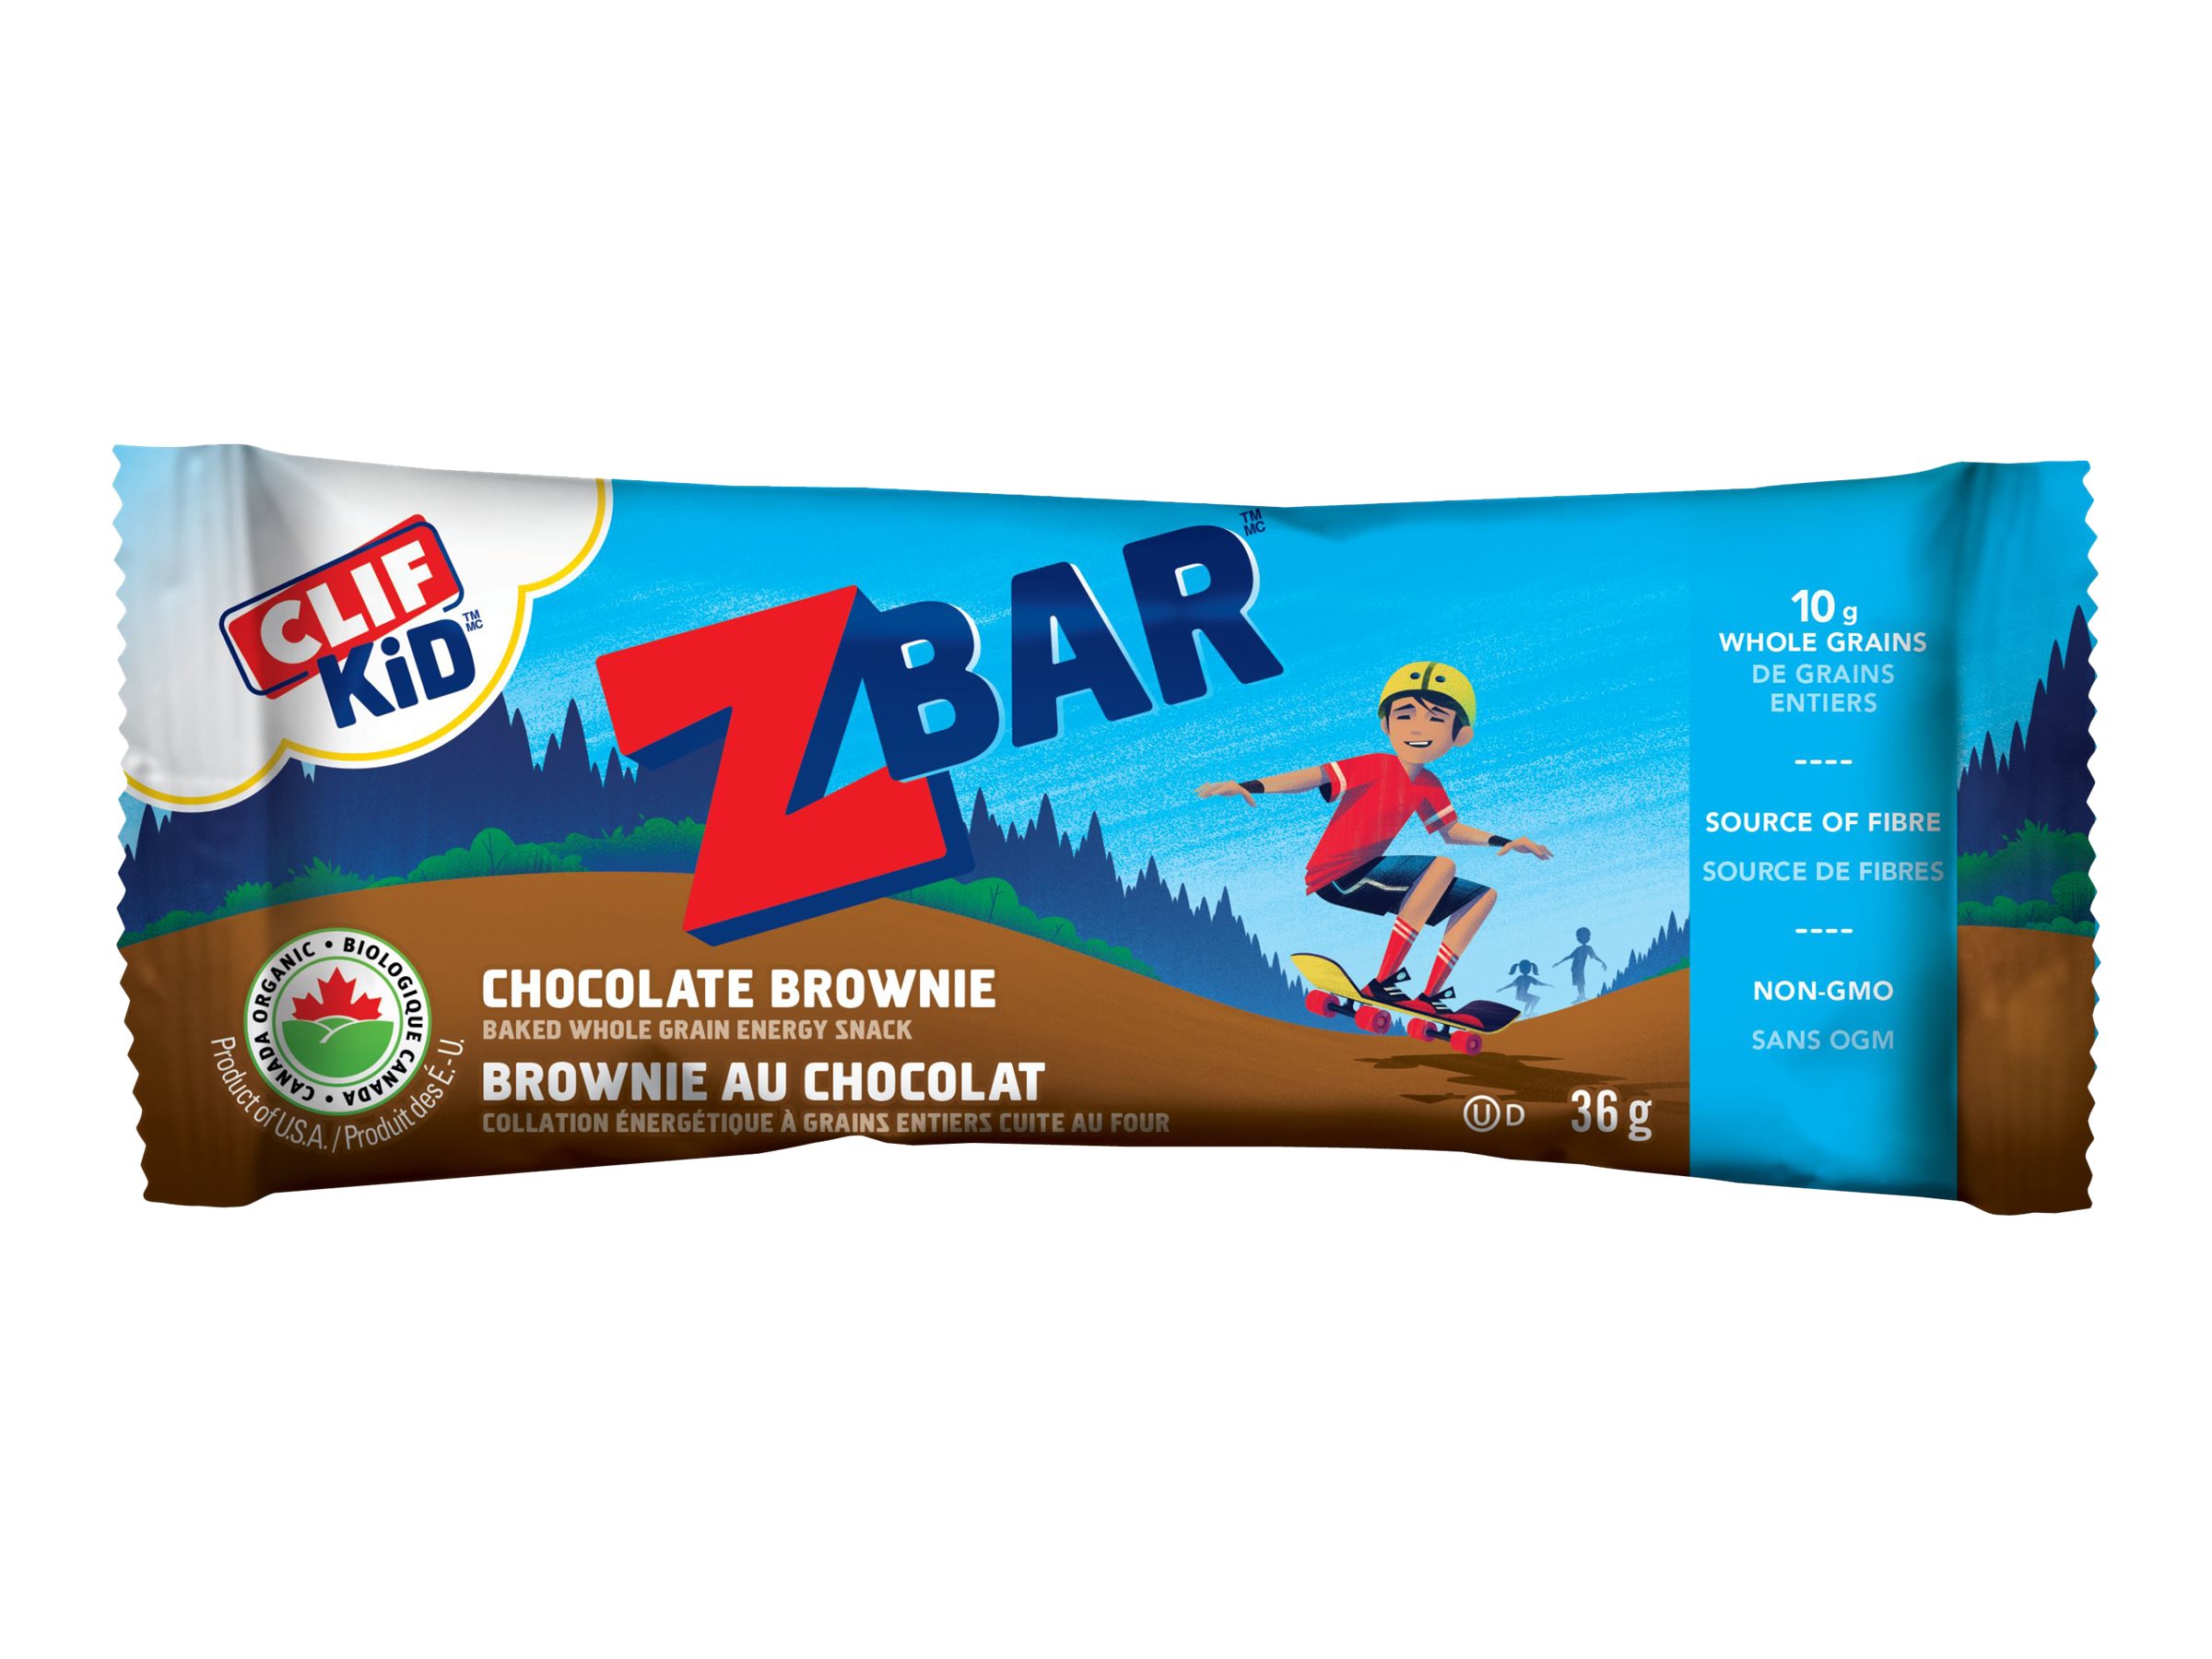 Clif Kid Organic Zbar - Chocolate Brownie - 5 x36g